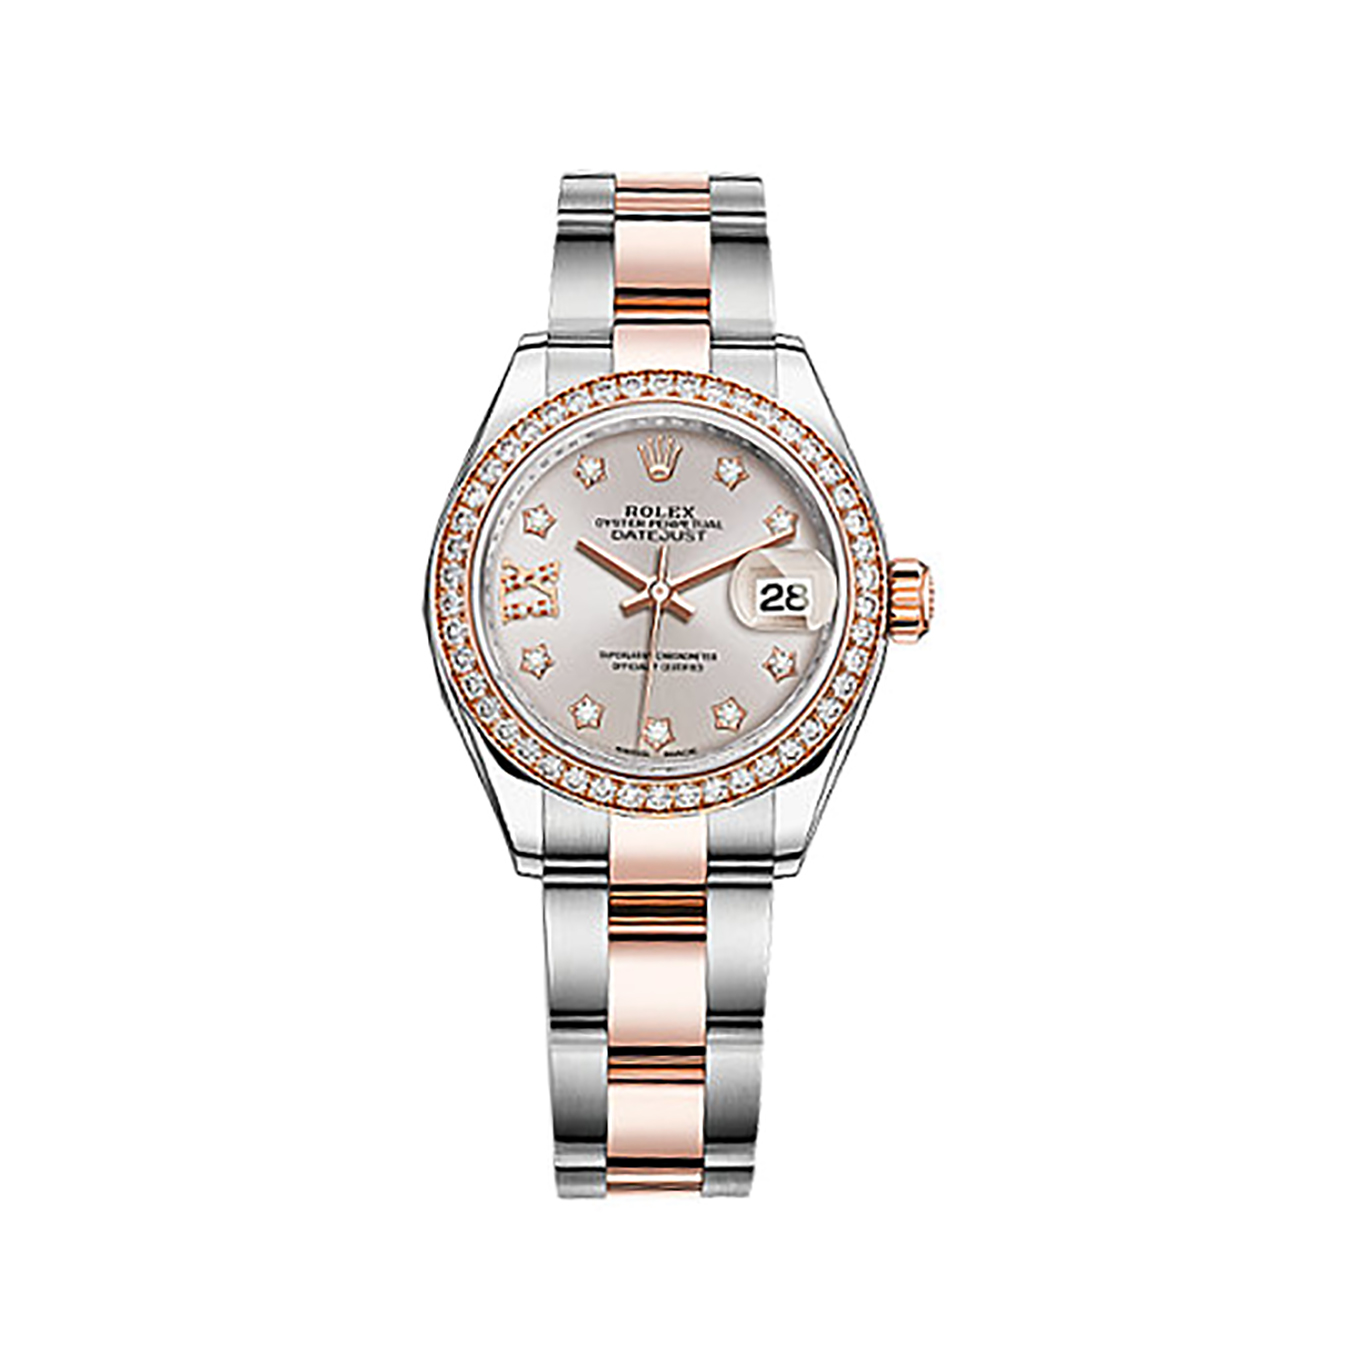 Lady-Datejust 28 279381RBR Rose Gold & Stainless Steel & Diamonds Watch (Sundust Set with Diamonds)